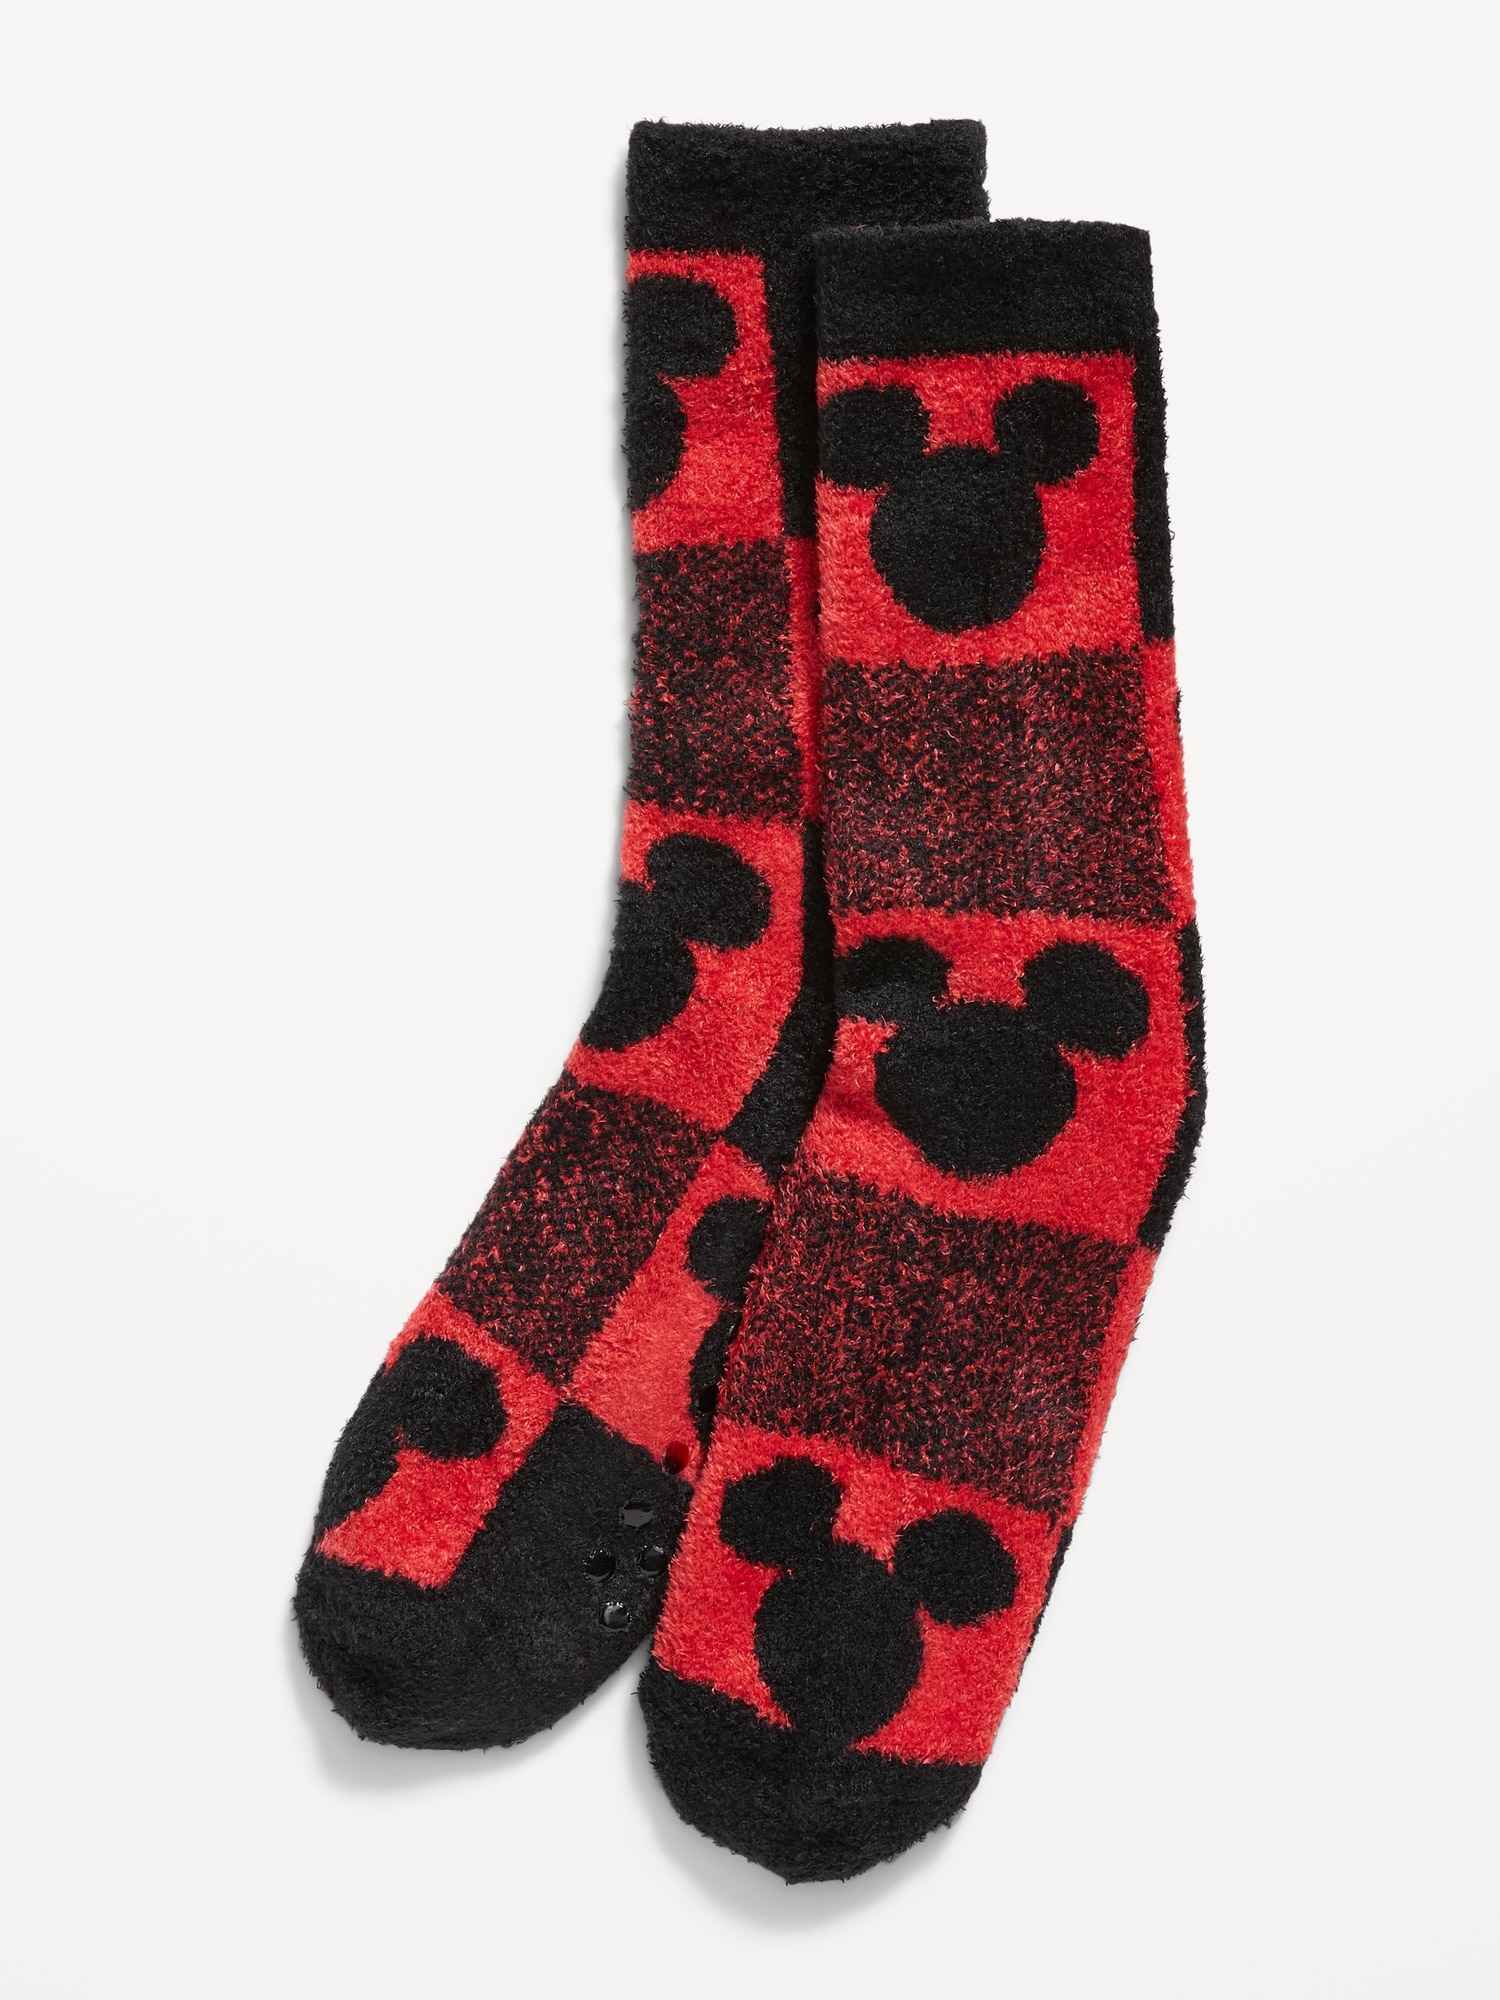 Disney© Mickey Mouse Cozy Socks for Men | Old Navy